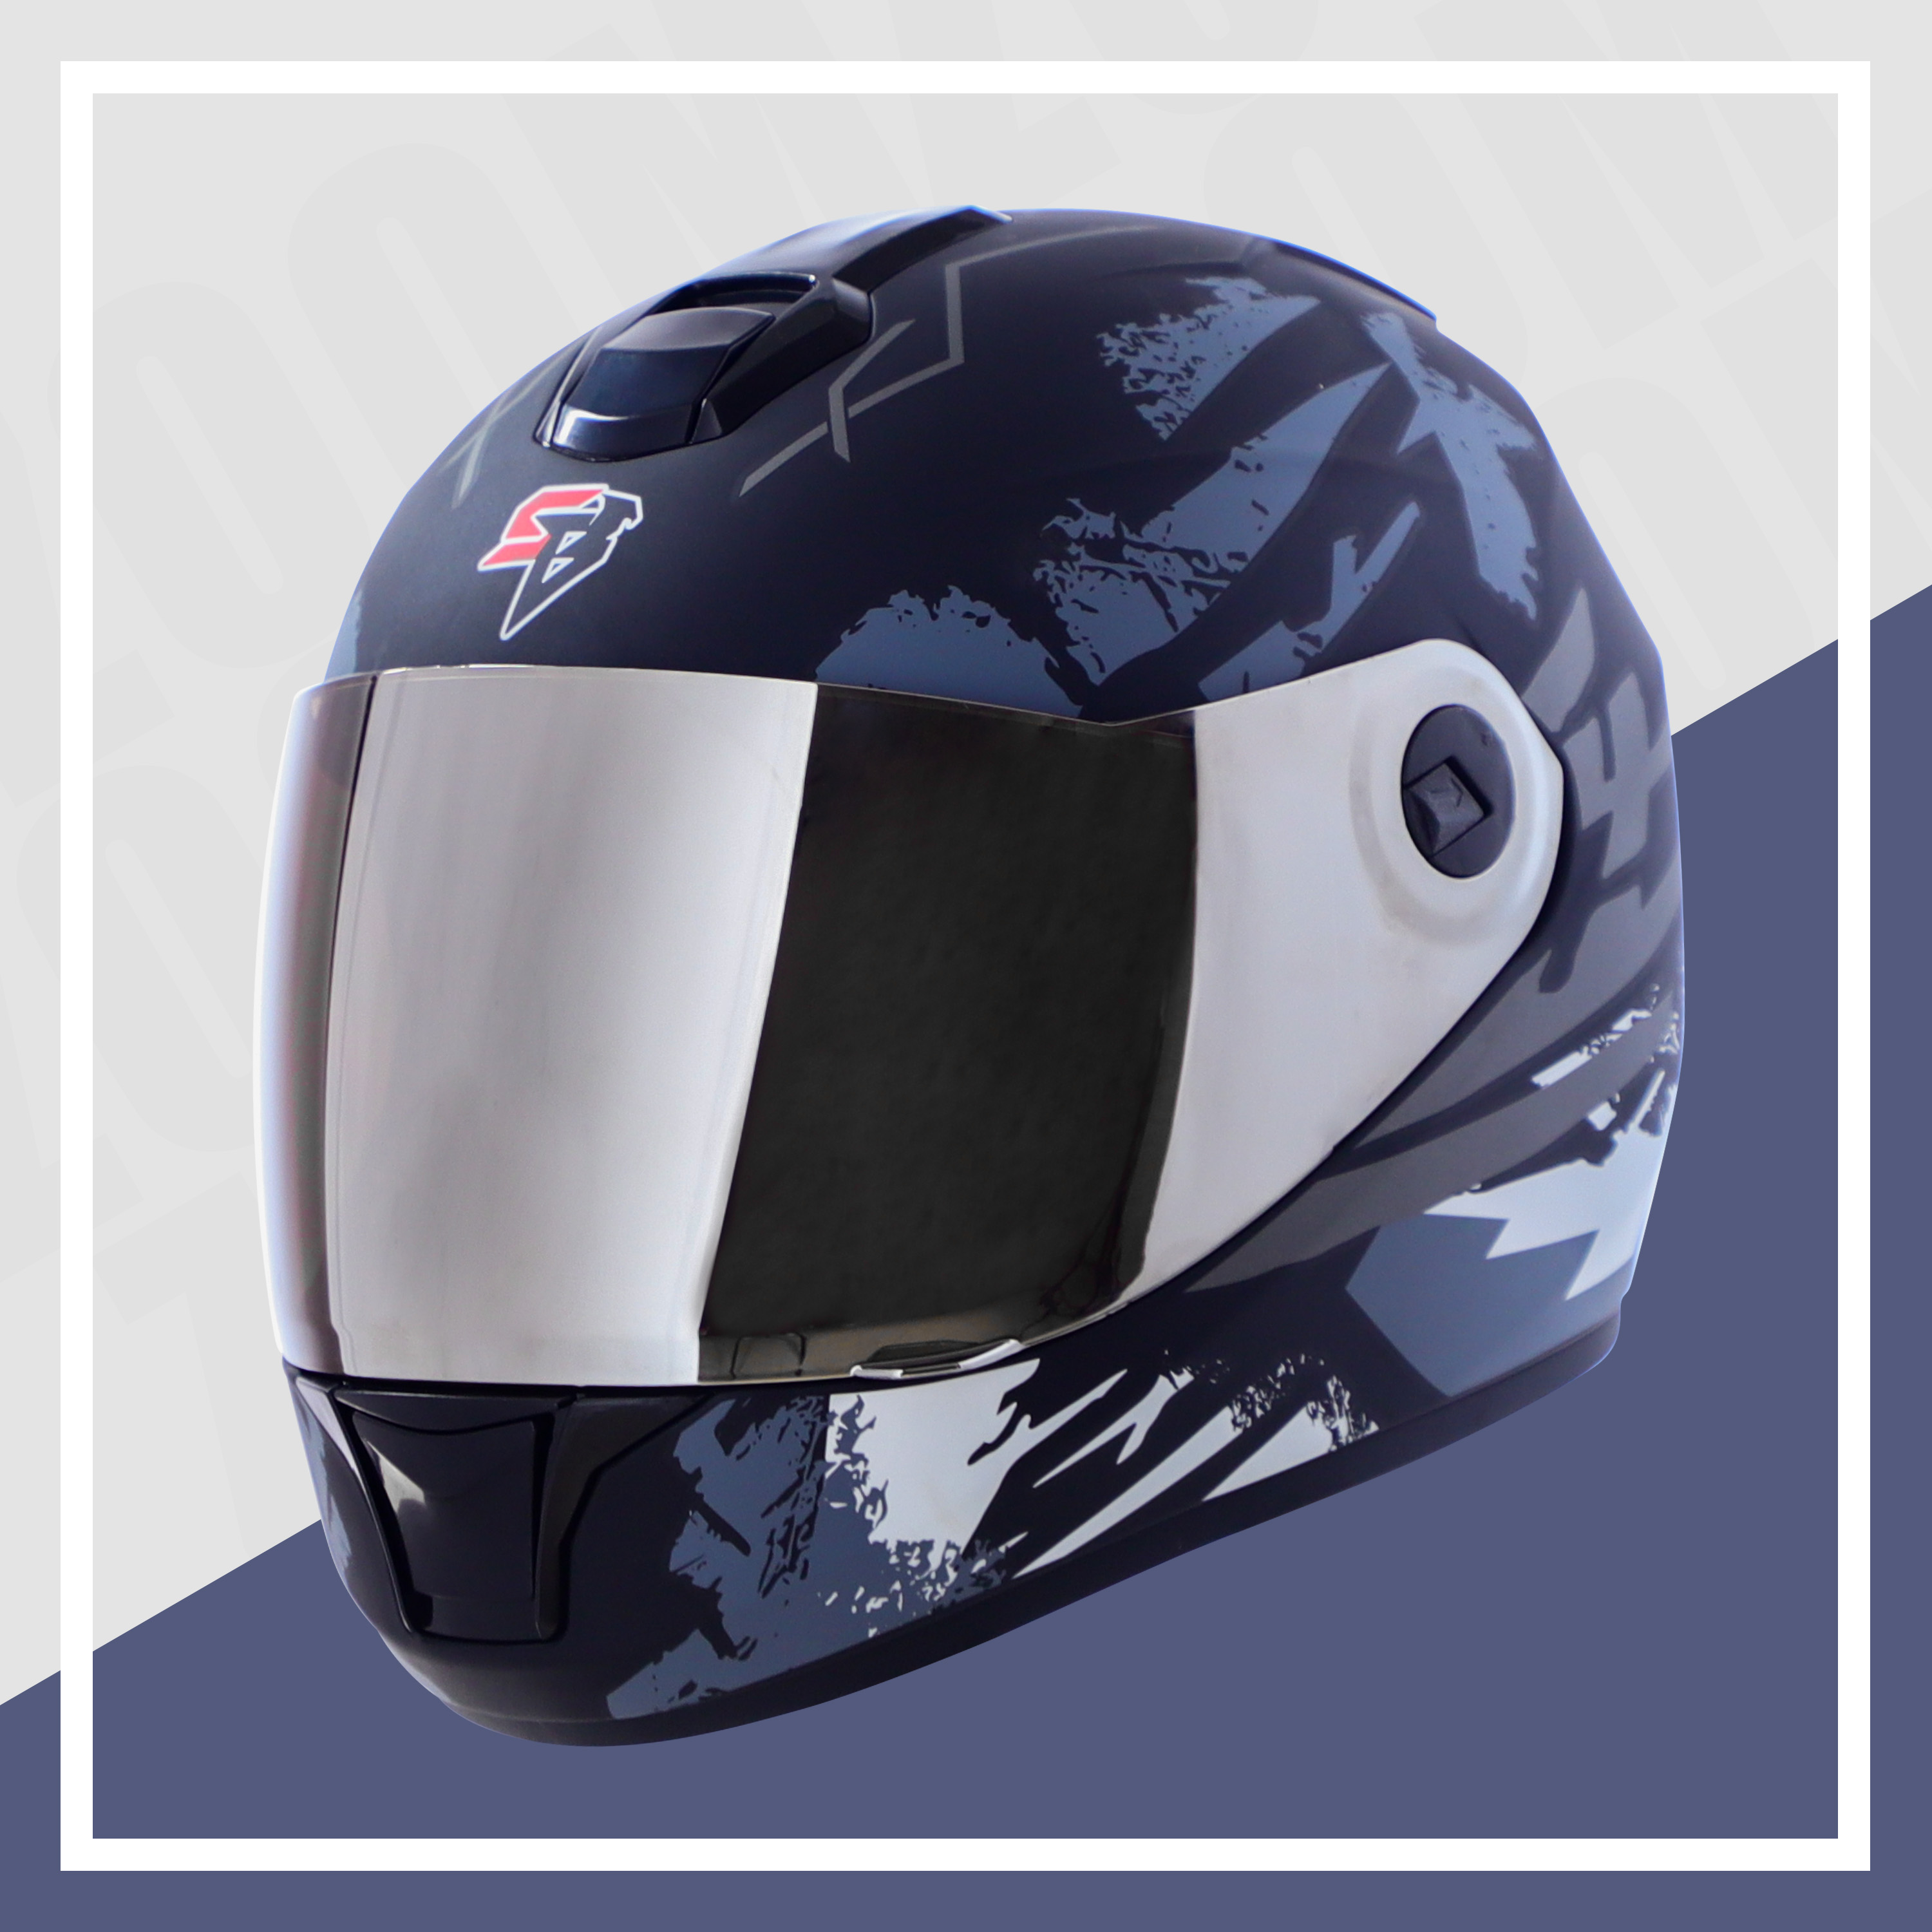 Steelbird SBH-11 Zoom Racer ISI Certified Full Face Graphic Helmet For Men And Women (Matt Black Grey With Chrome Silver Visor)